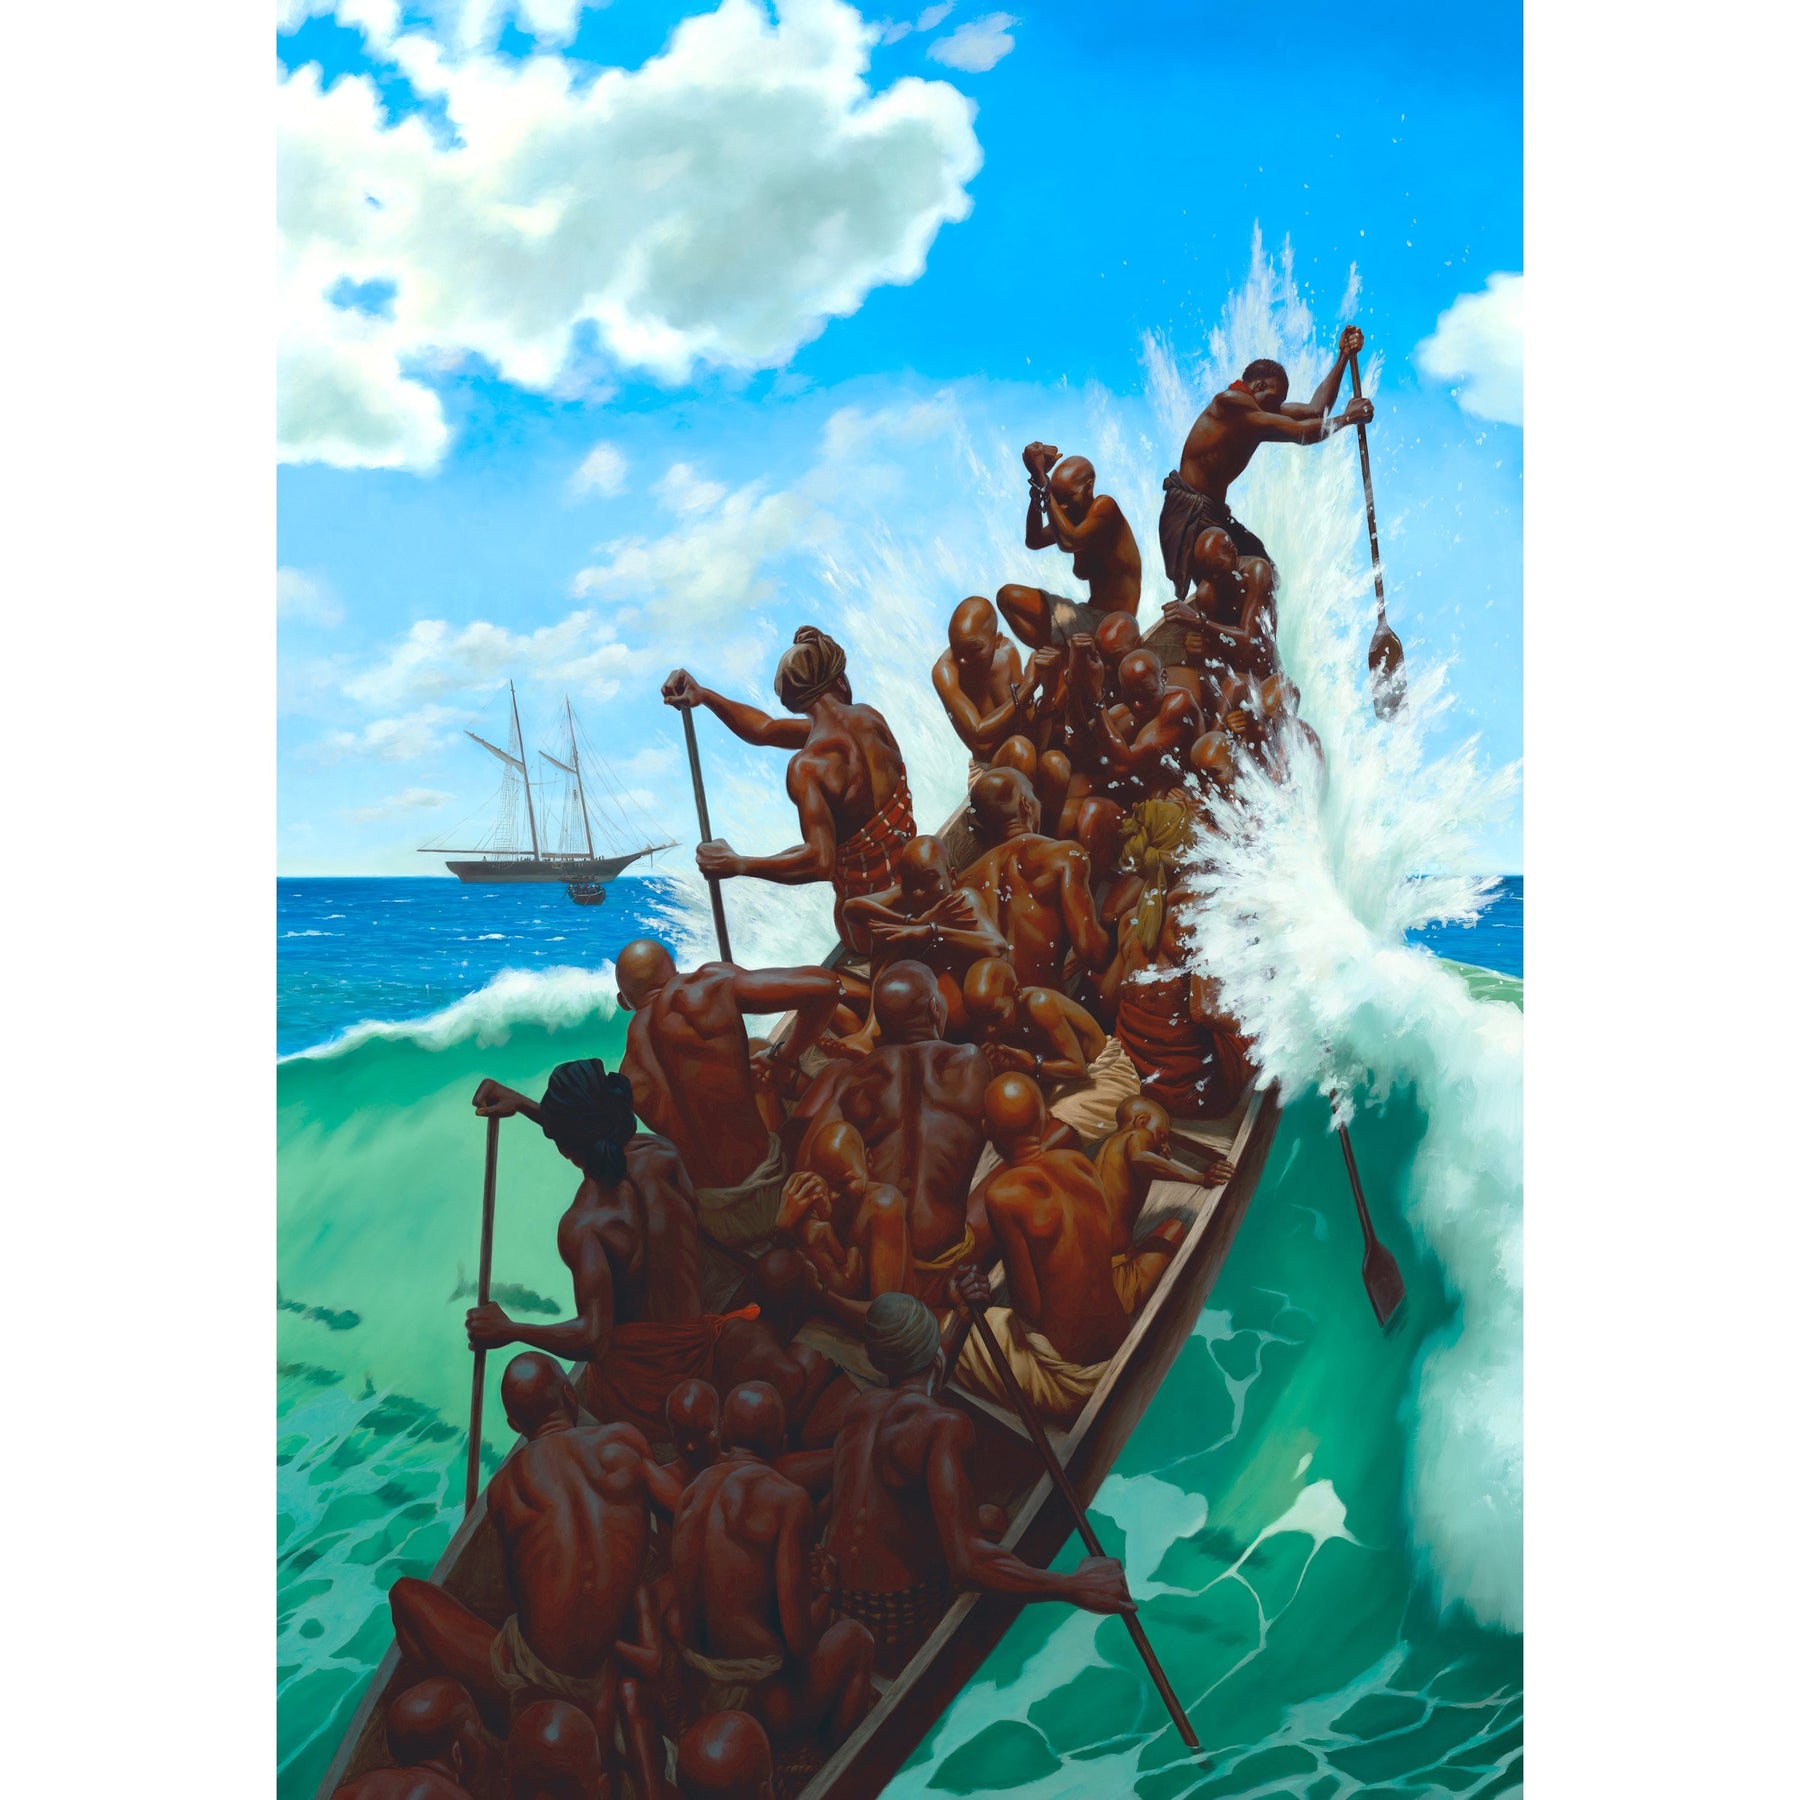 1 of 2: Flight of the Clotilda (America's Last Slave Ship) by Kadir Nelson